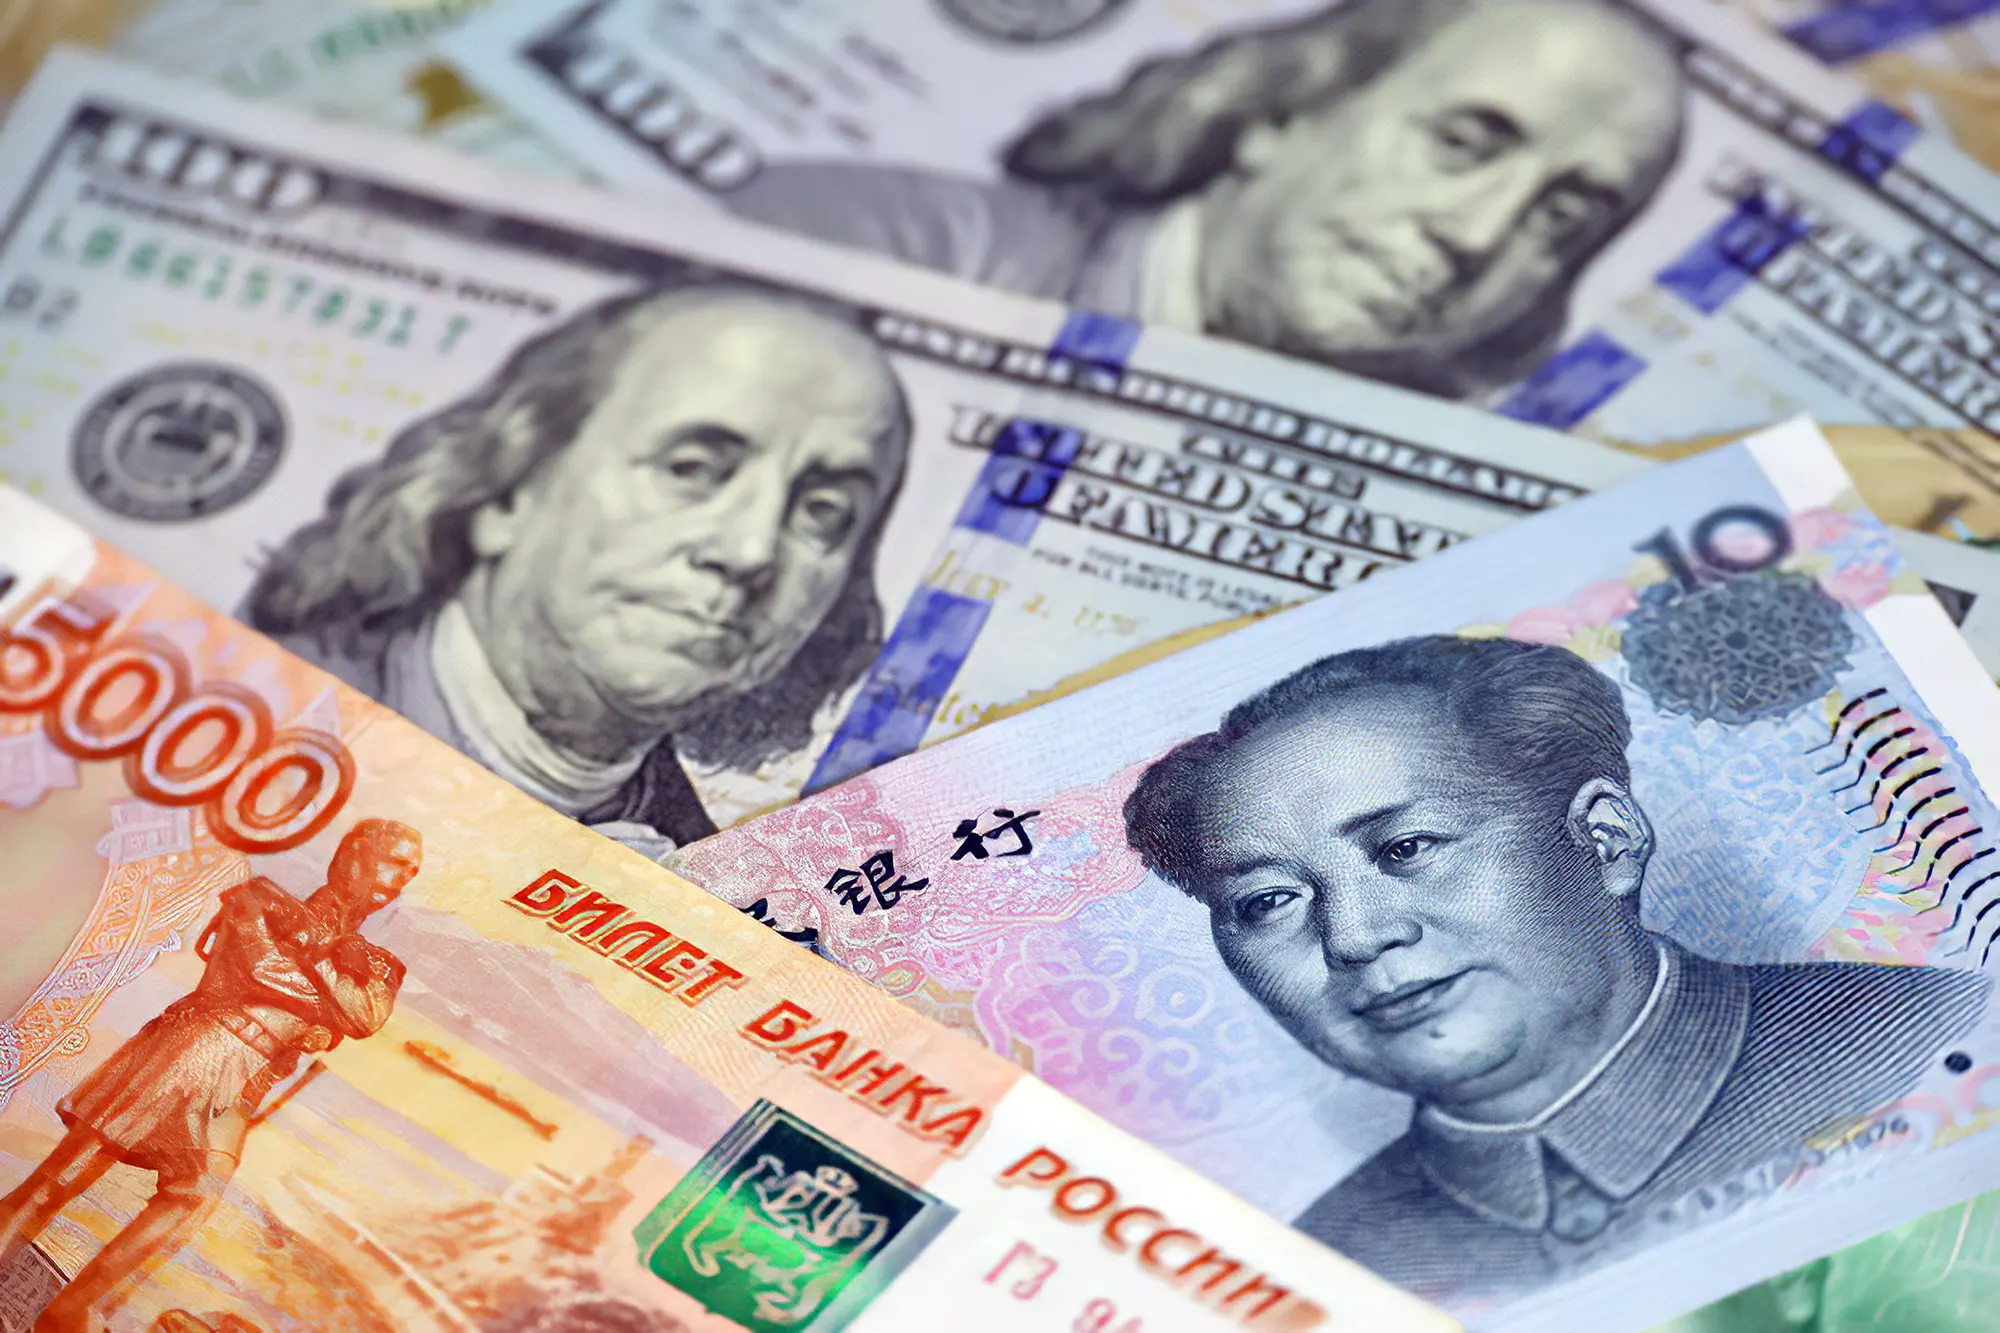 Г долларов в рублях. Китайский доллар. Доллары в рубли. Юань (валюта). Юань к доллару.